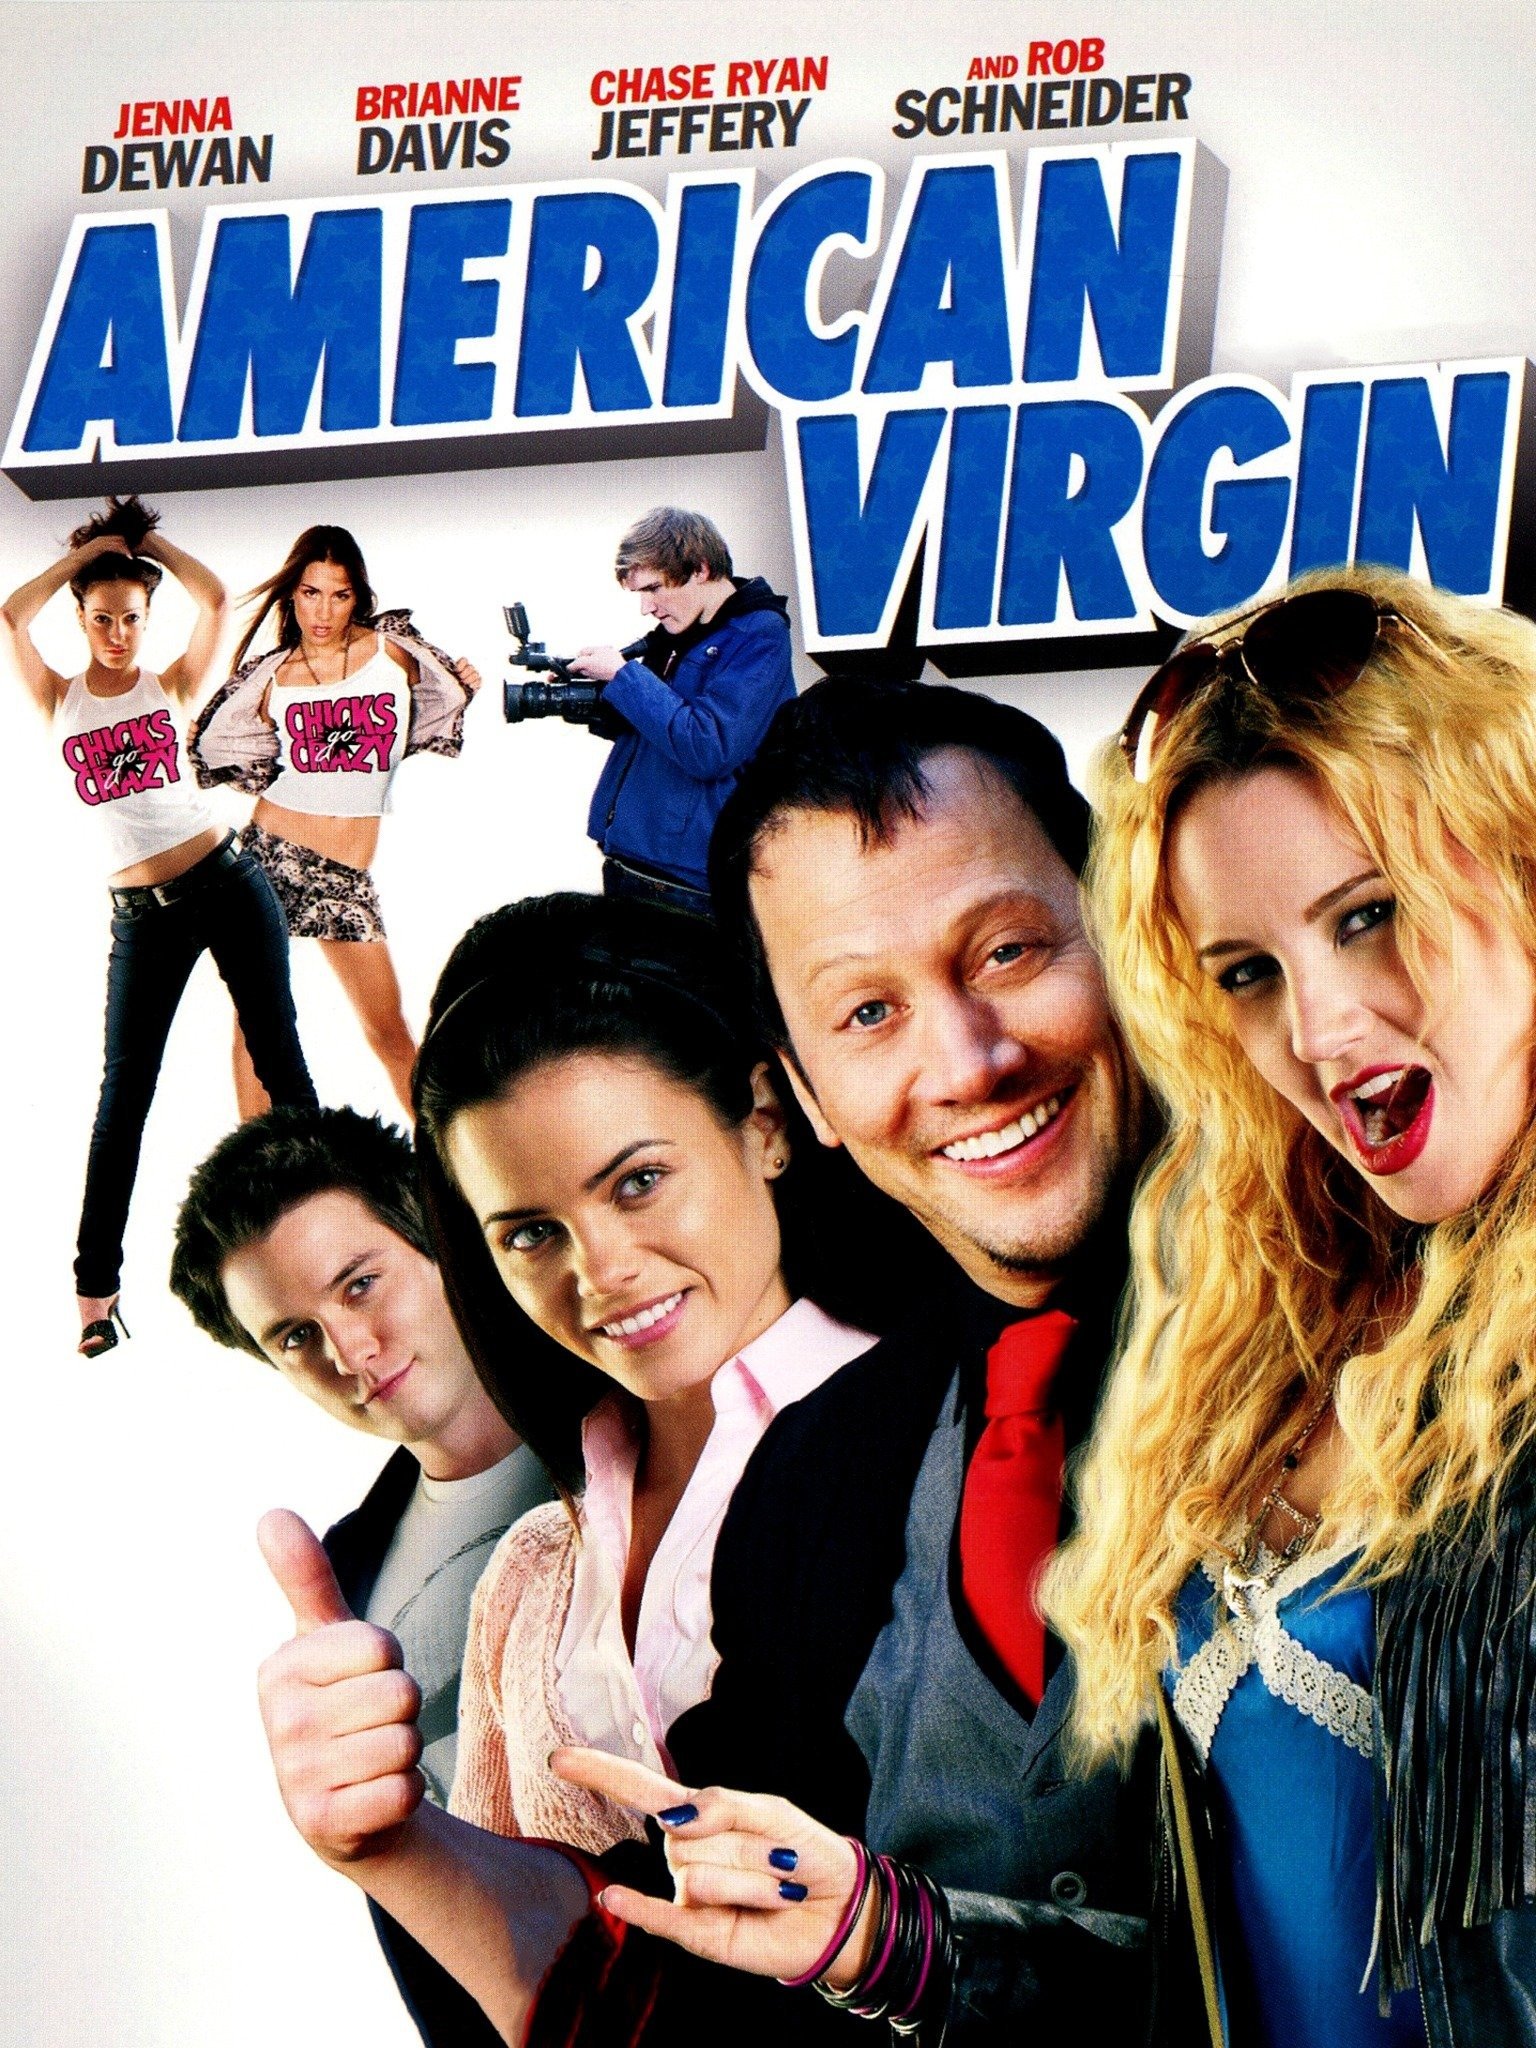 American virgin